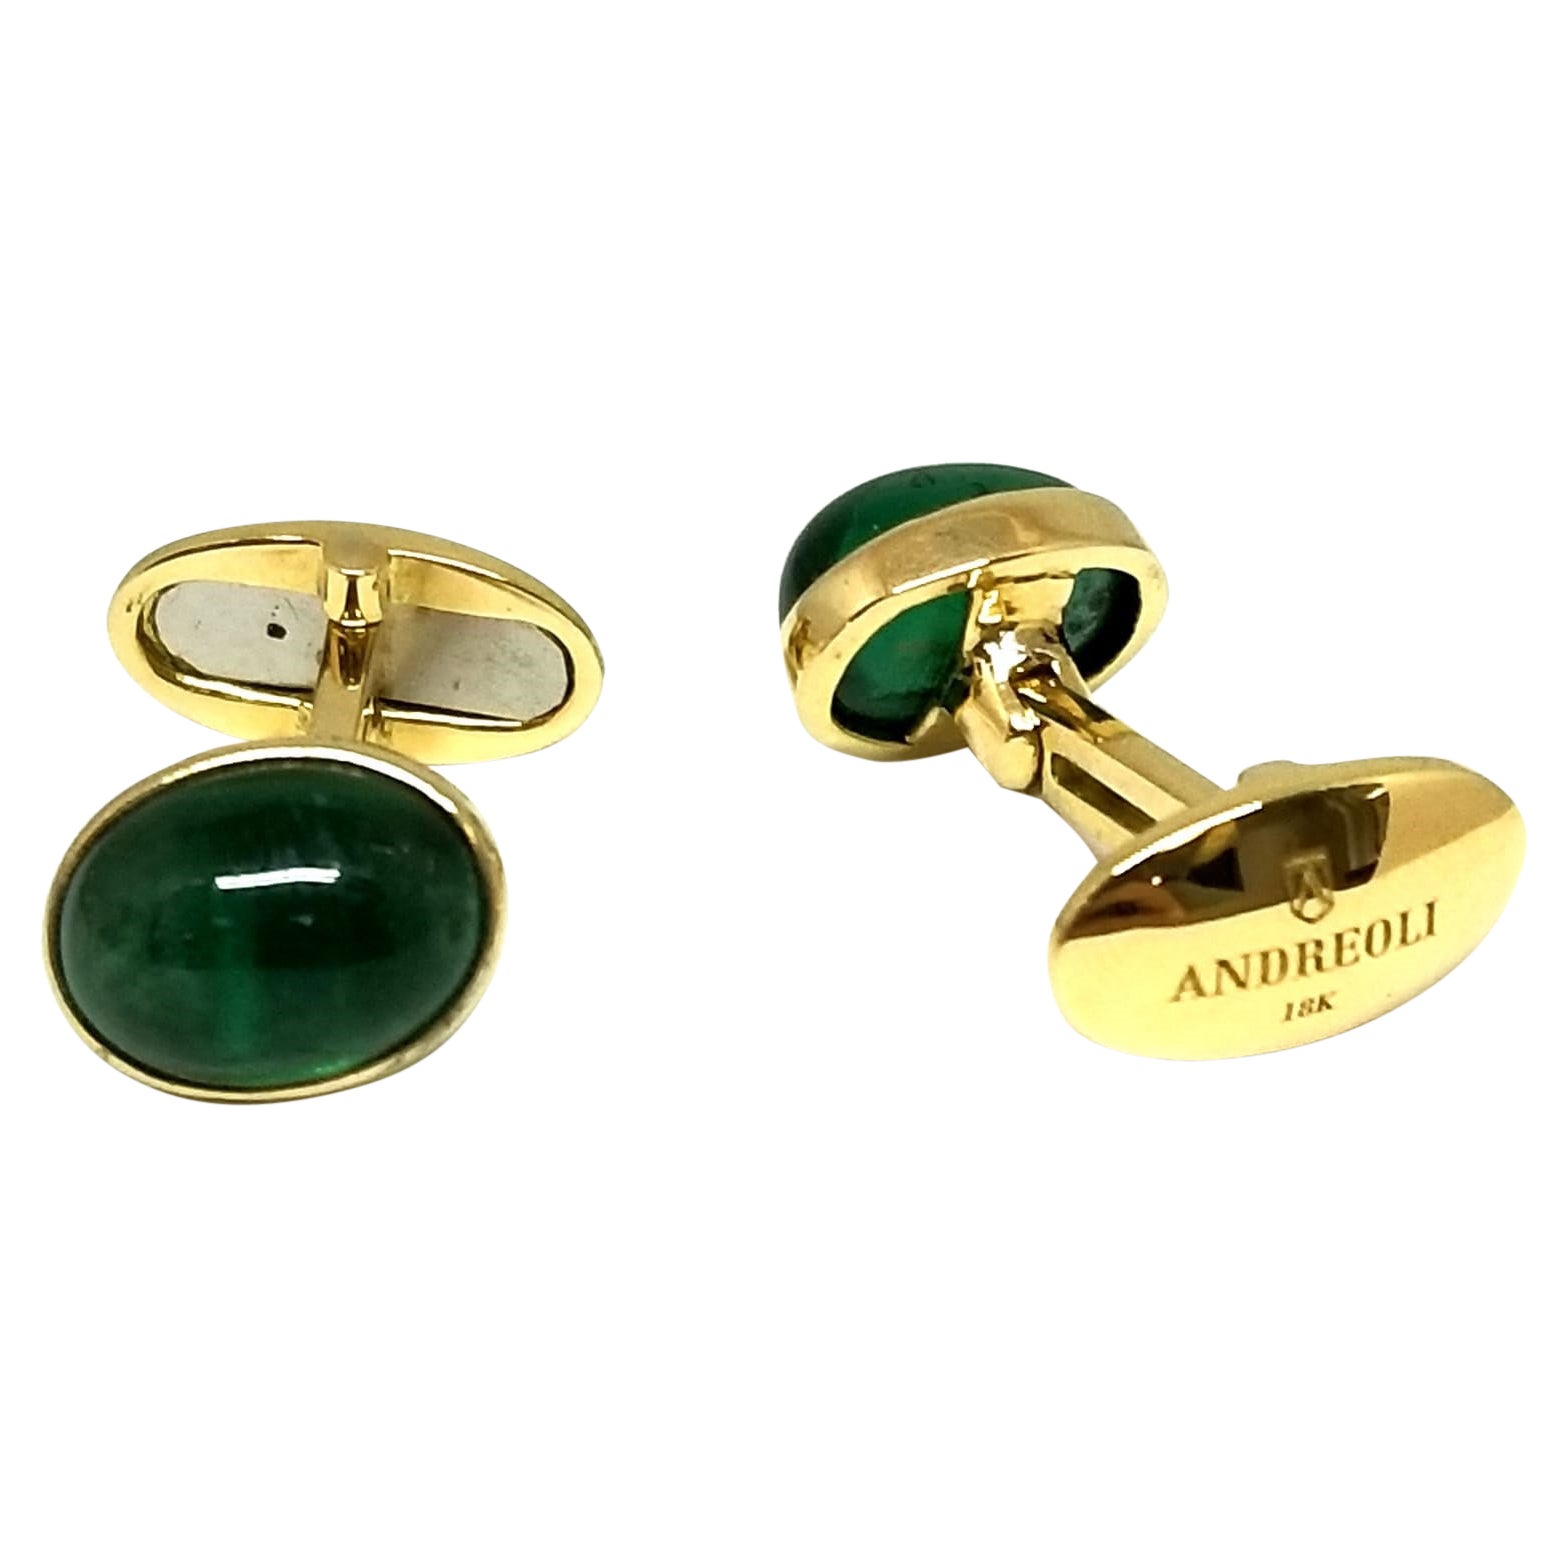 Andreoli 9.85 Carat Emerald 18 Karat Yellow Gold Cufflinks